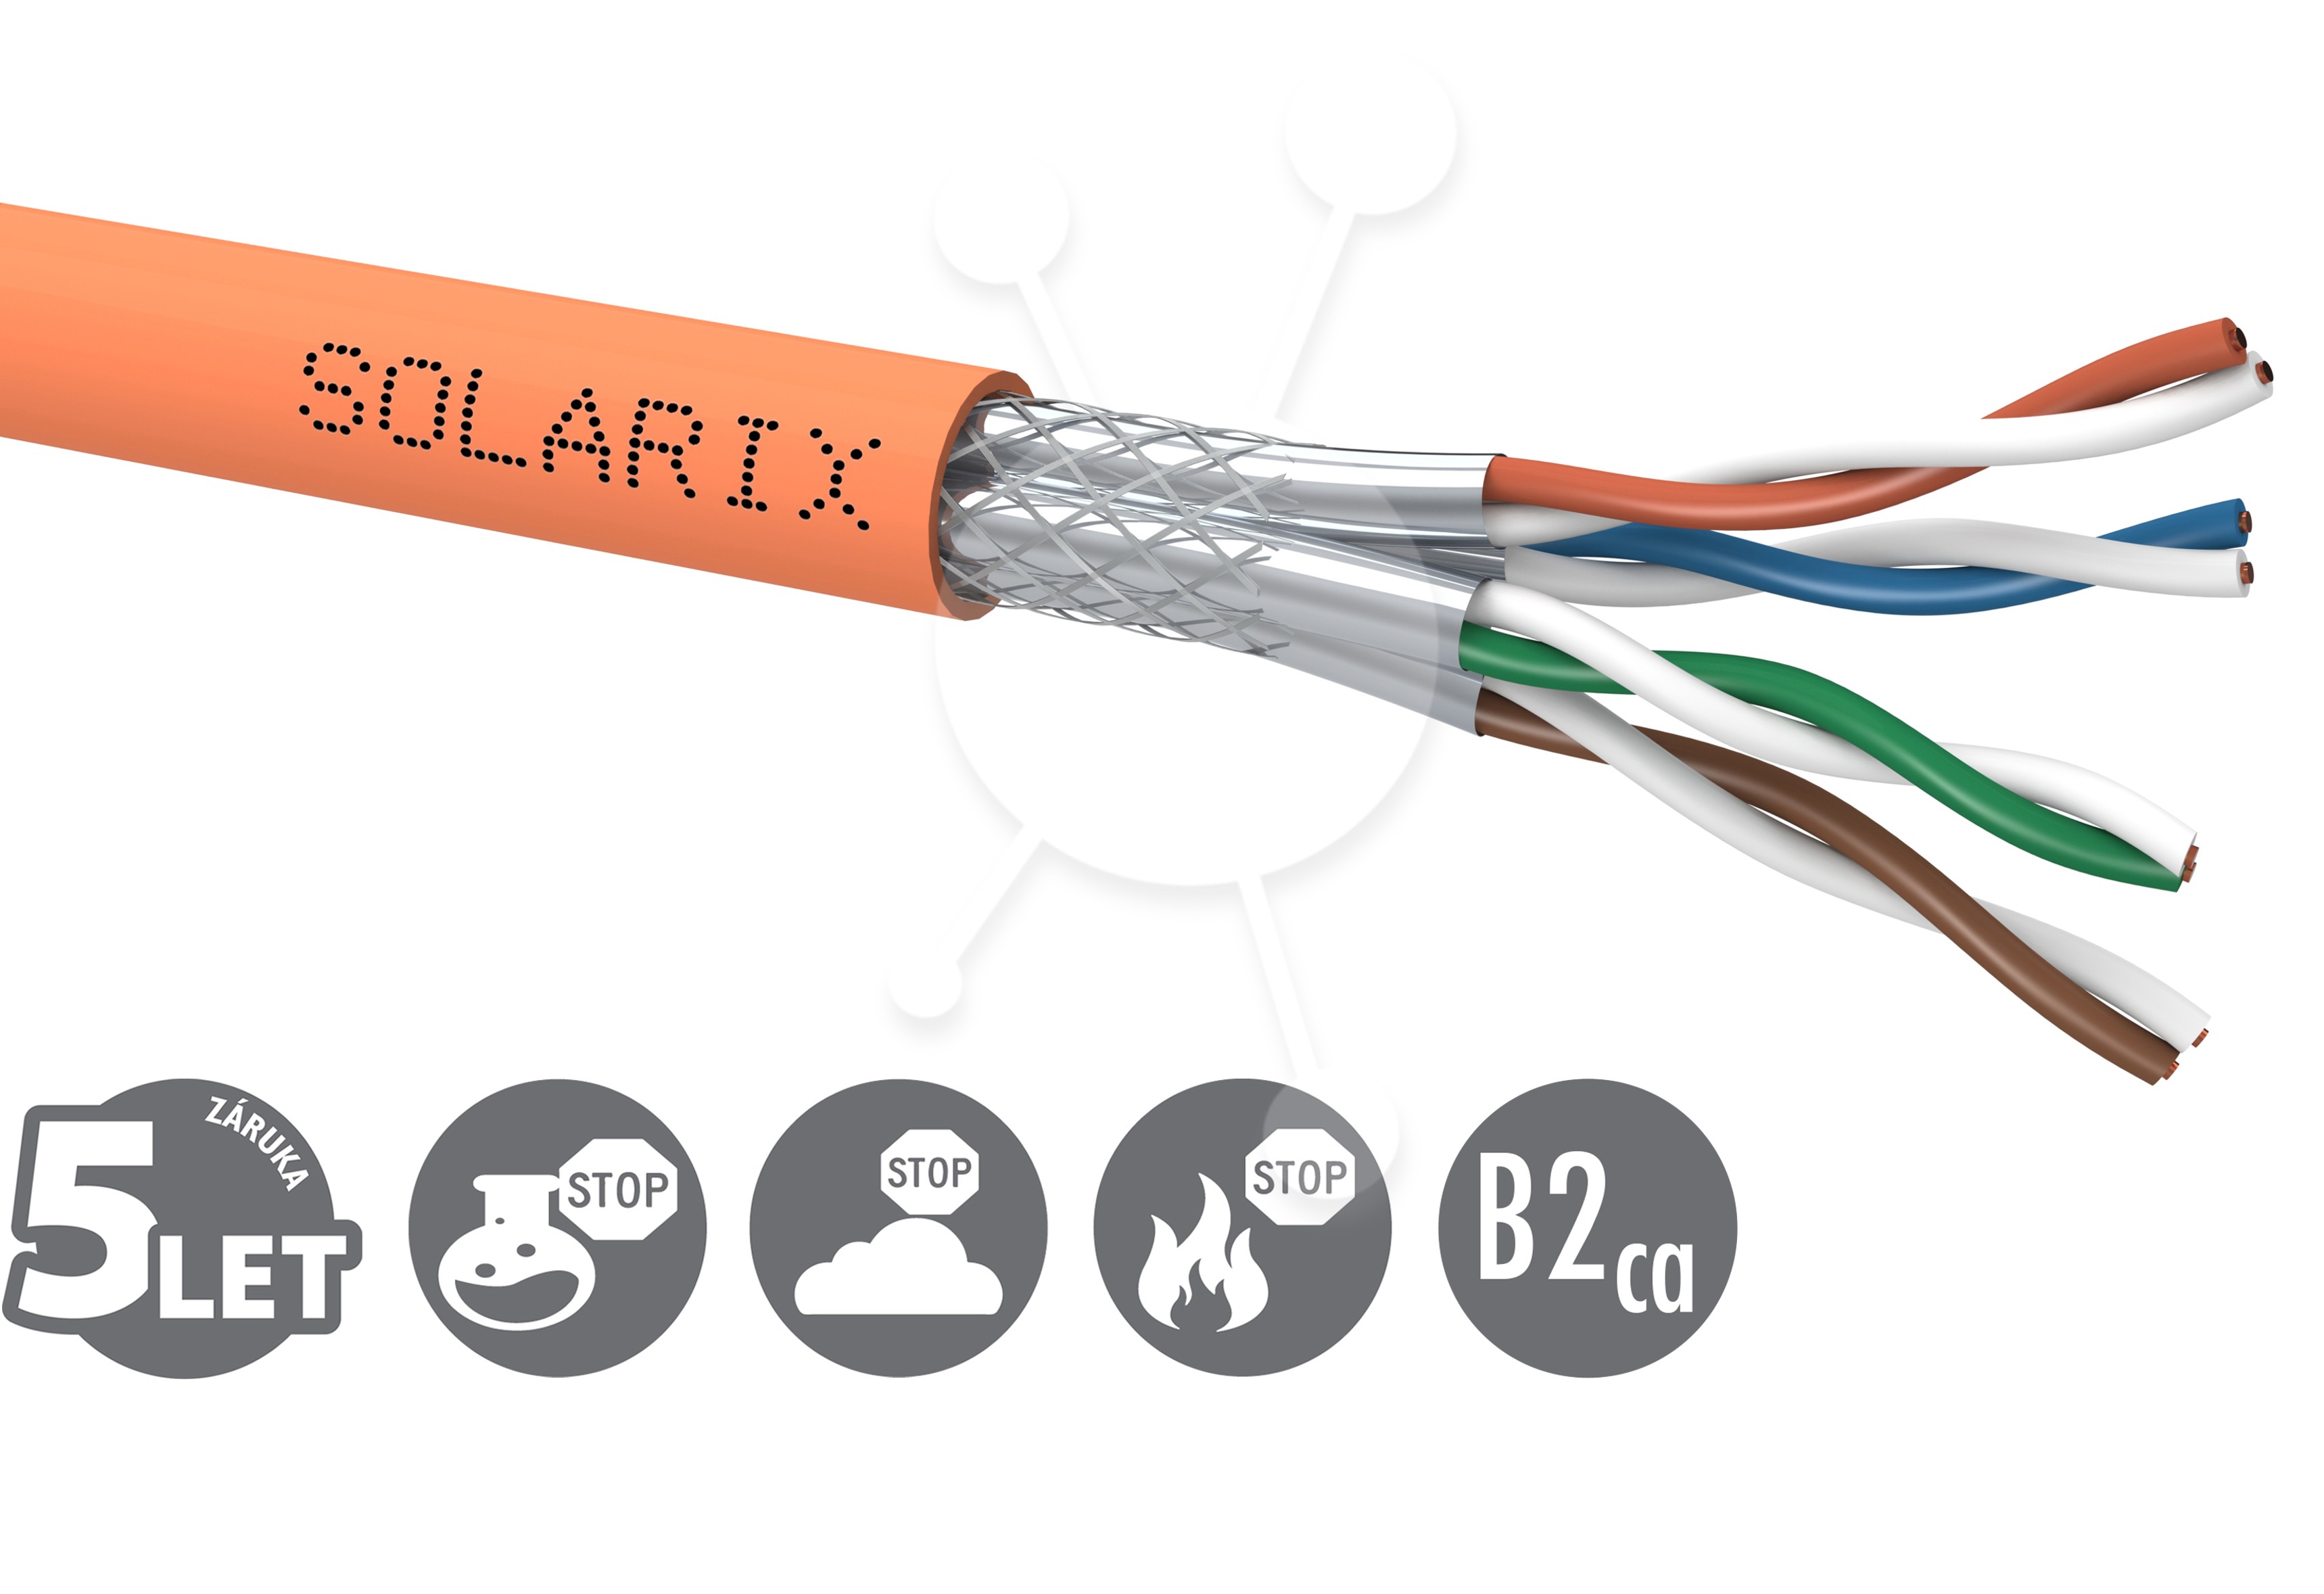 Instalační kabel Solarix CAT7 SSTP LSOHFR B2ca-s1,d1,a1 500m/cívka SXKD-7-SSTP-LSOHFR-B2ca